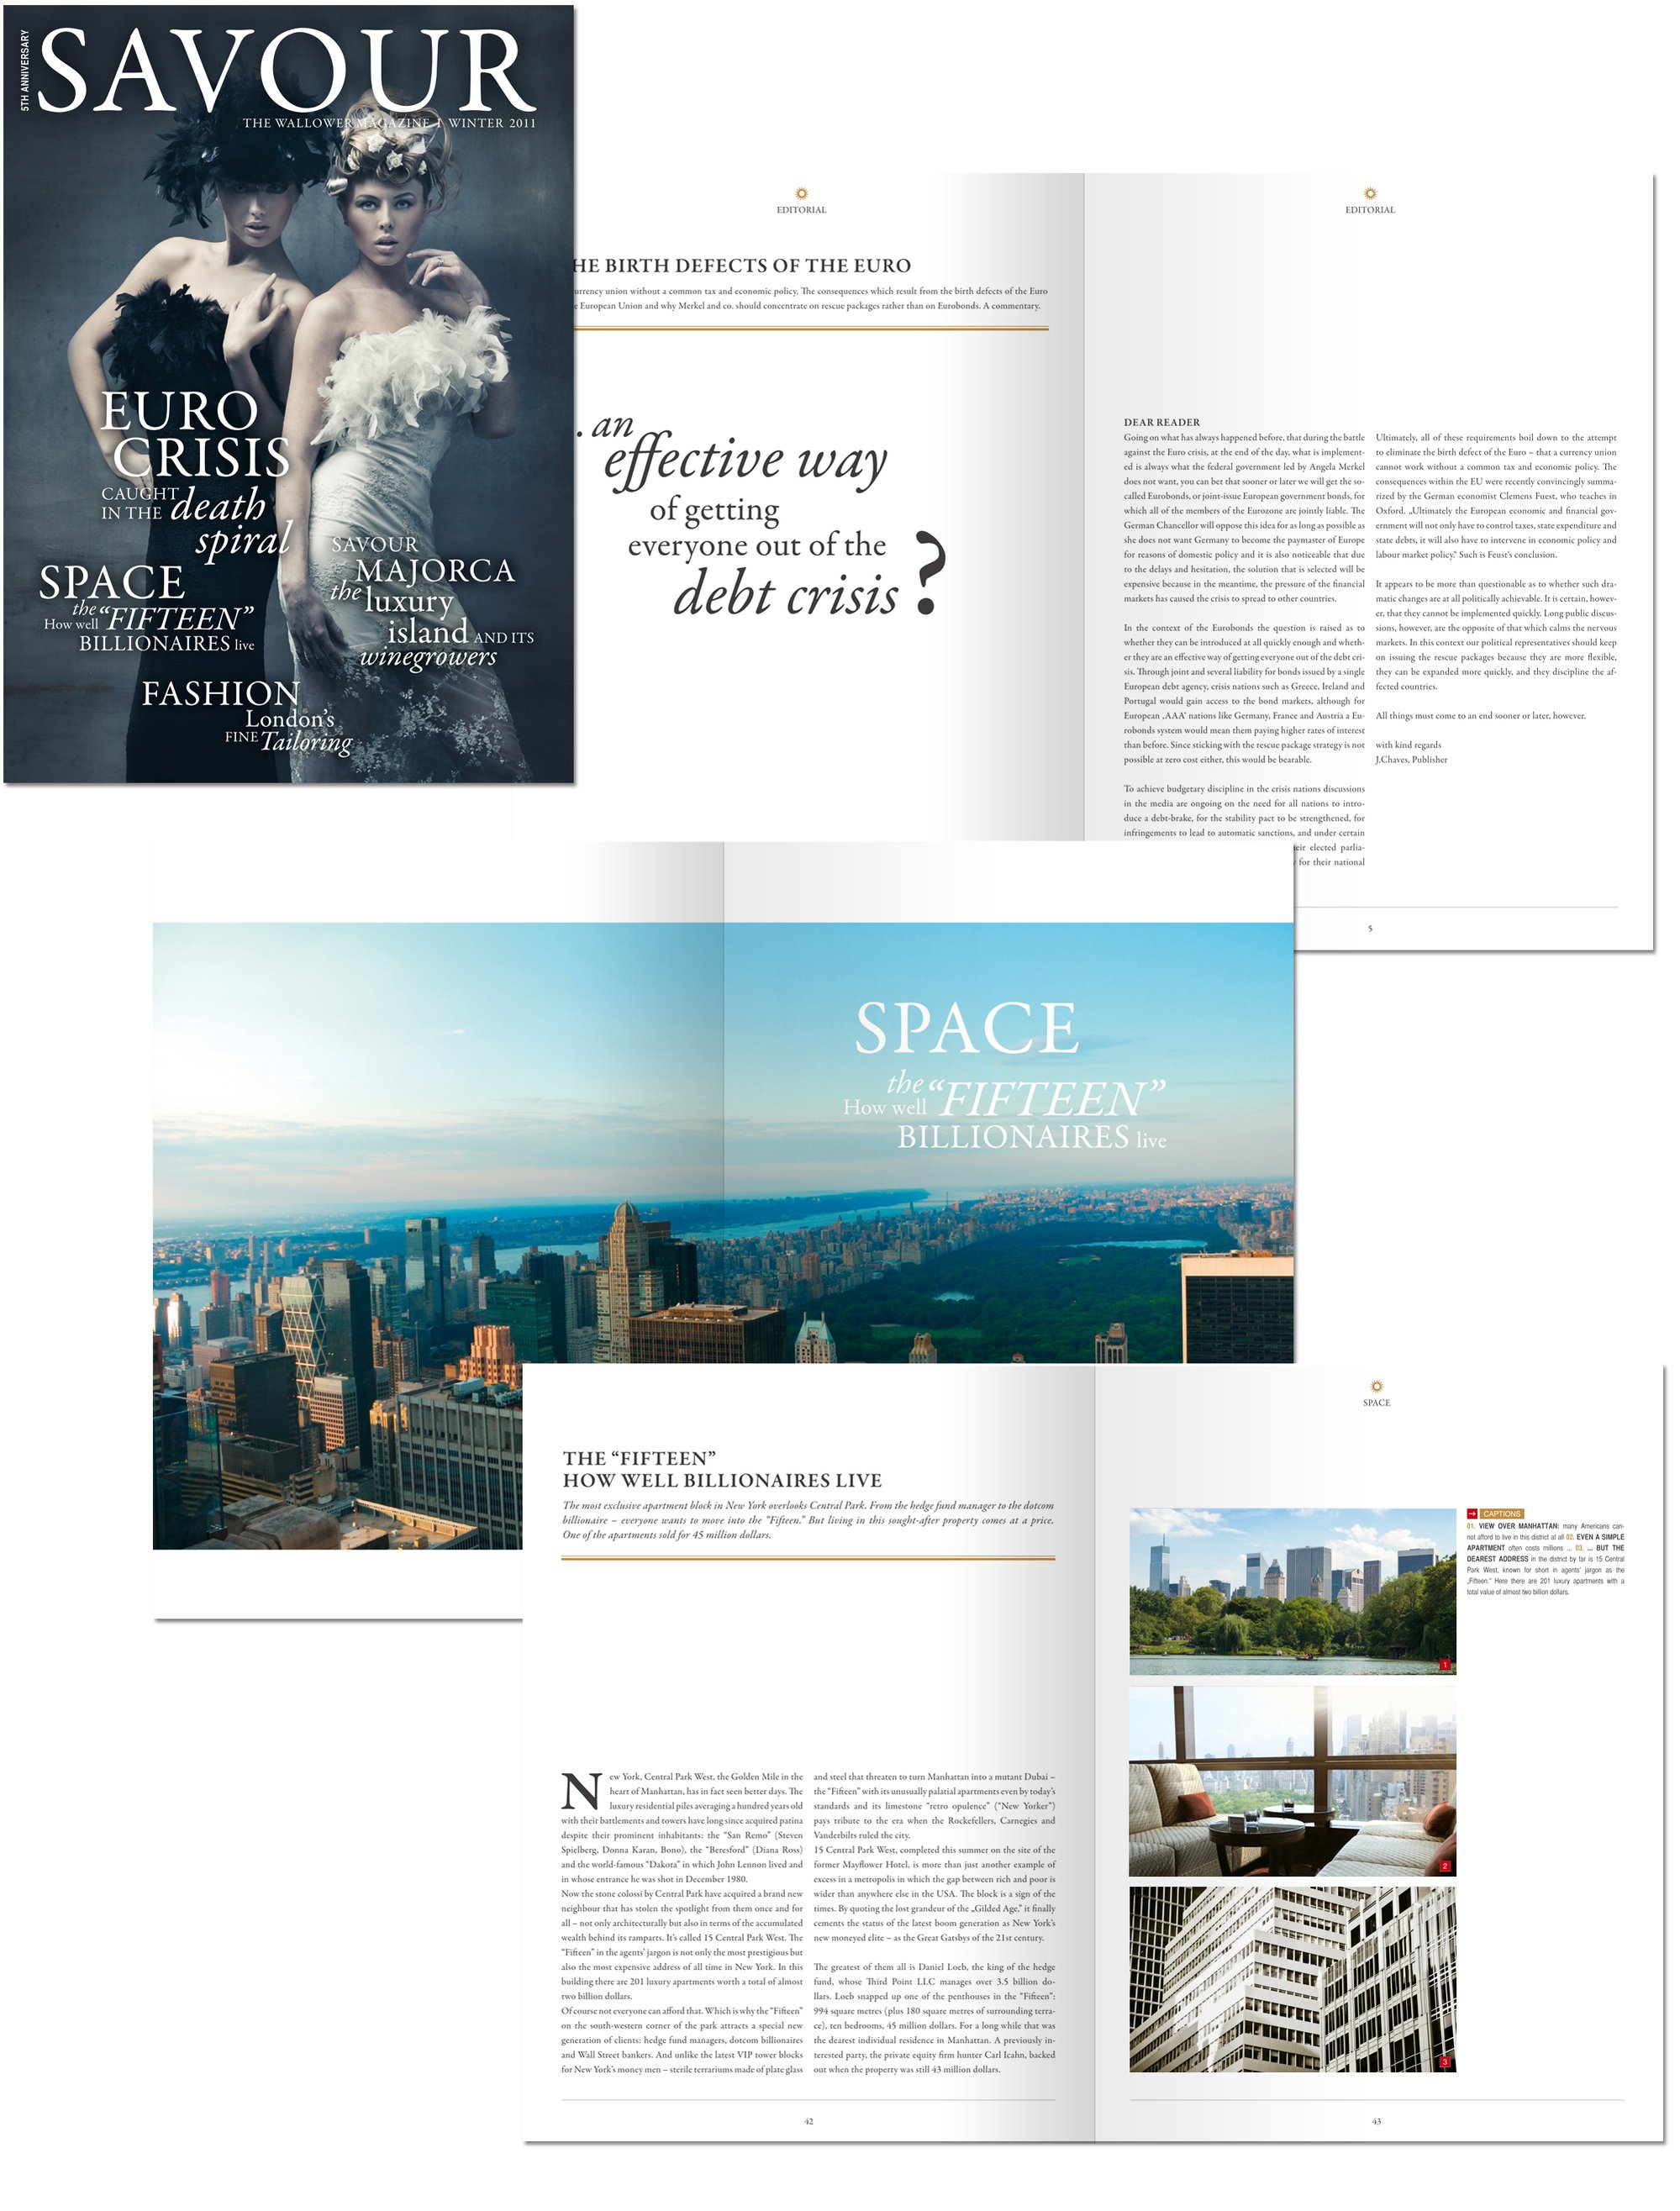 SAVOUR | Magazin Design, Print, Druckgrafik, Layout